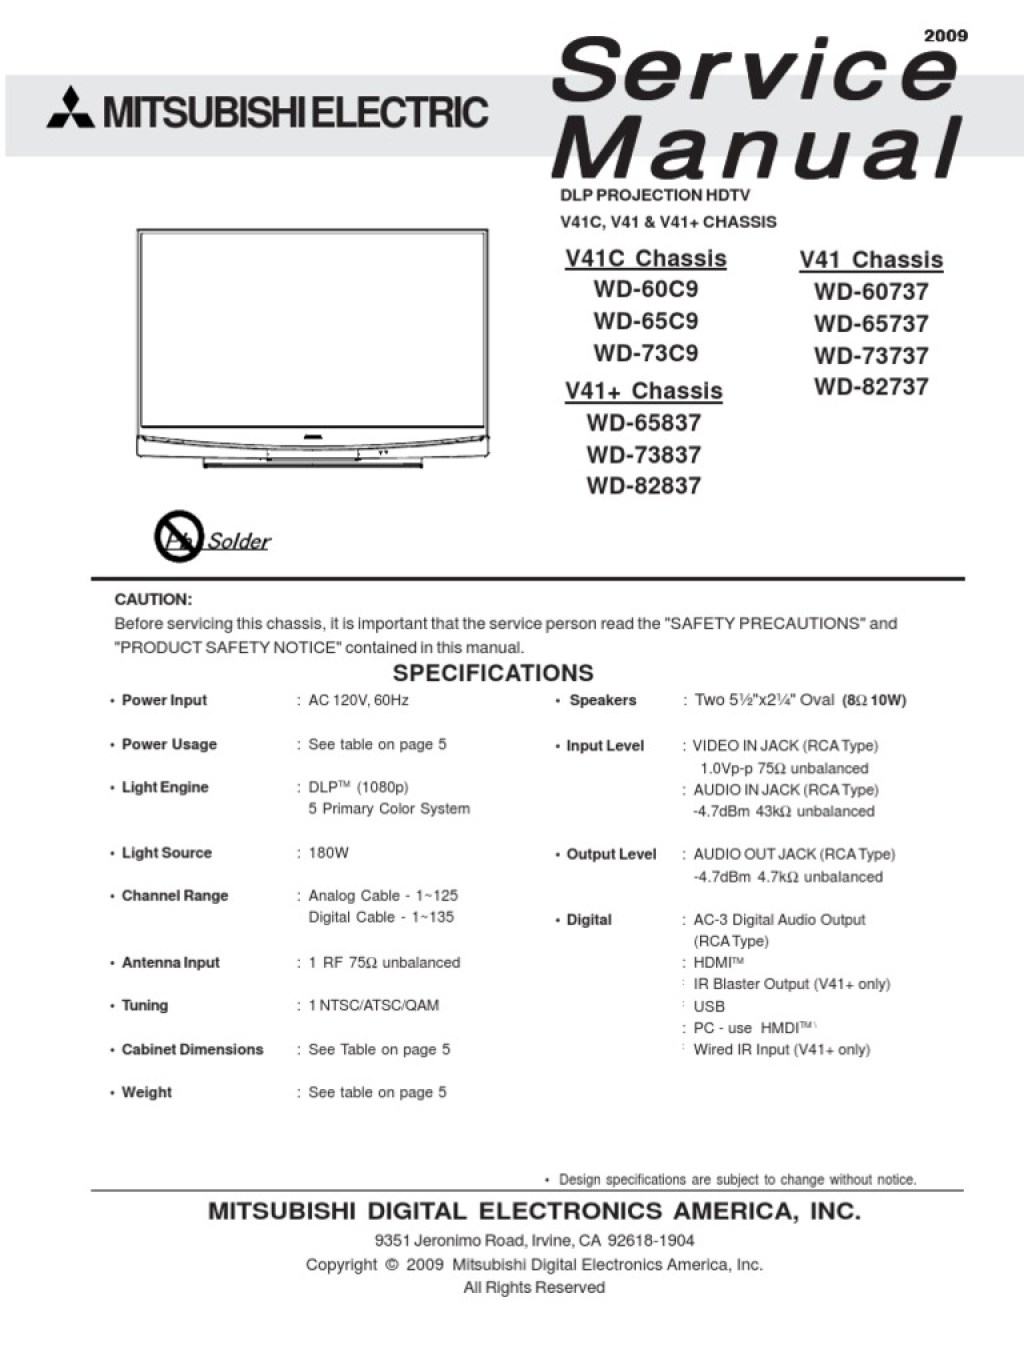 Picture of: Mitsubishi Service Manual V Chassis  PDF  Hdmi  Printed